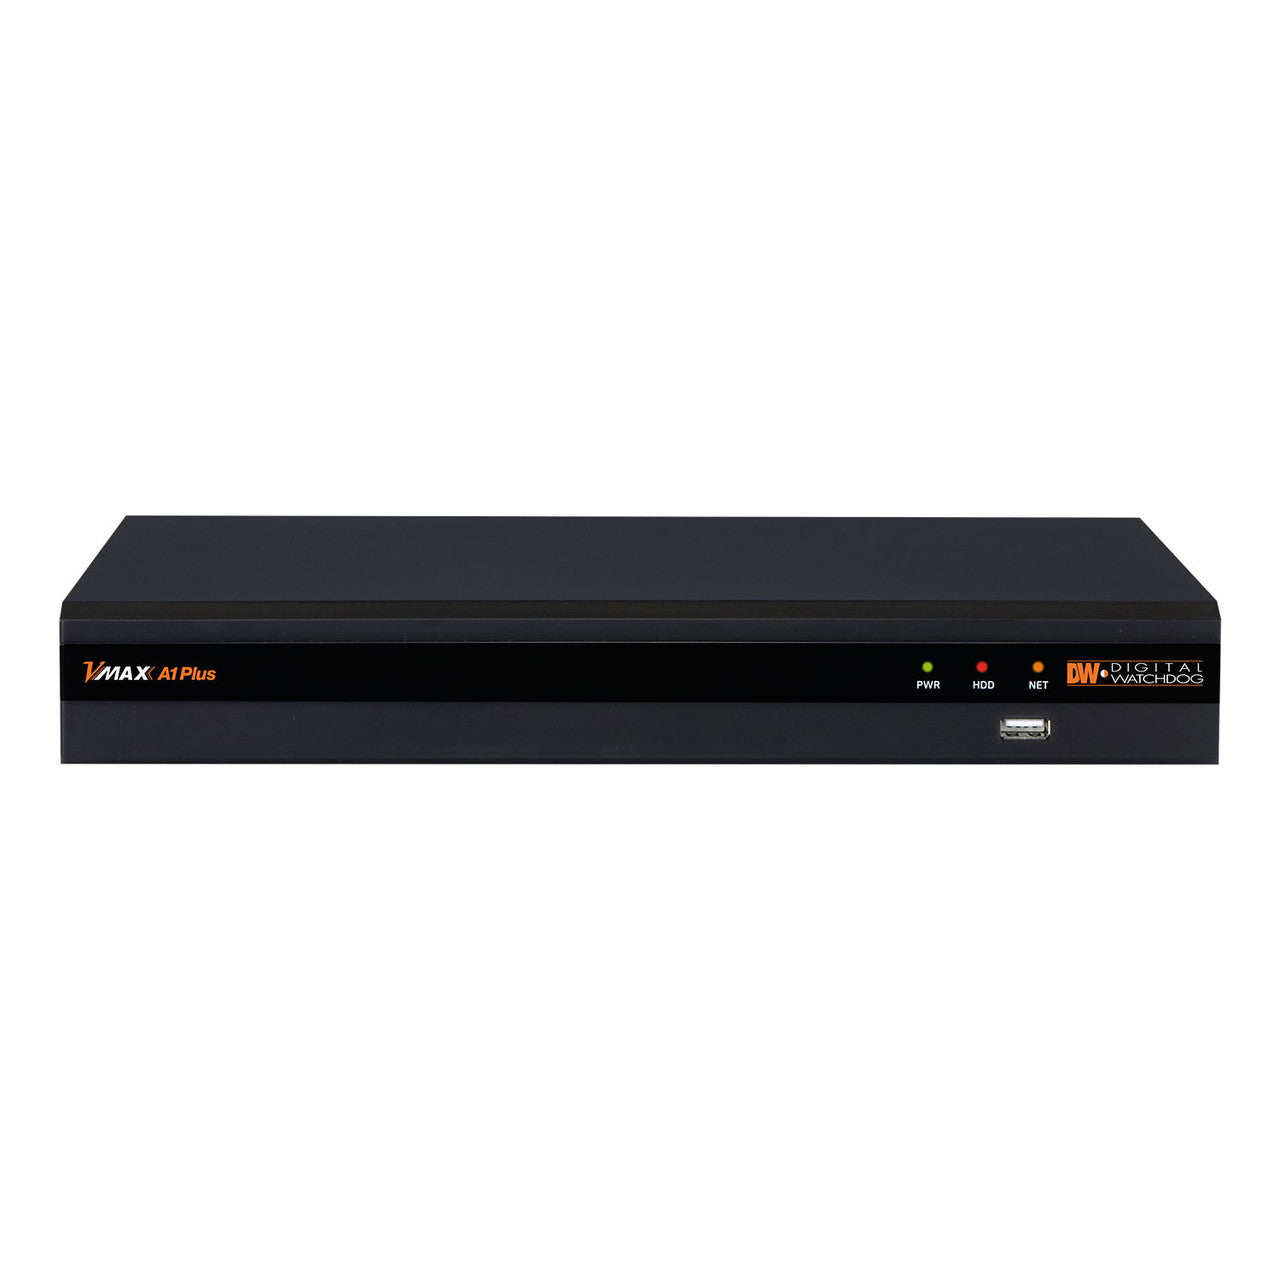 Digital Watchdog DW-VA1P44T HD over Coax 4-Channel DVR - 4TB HDD included